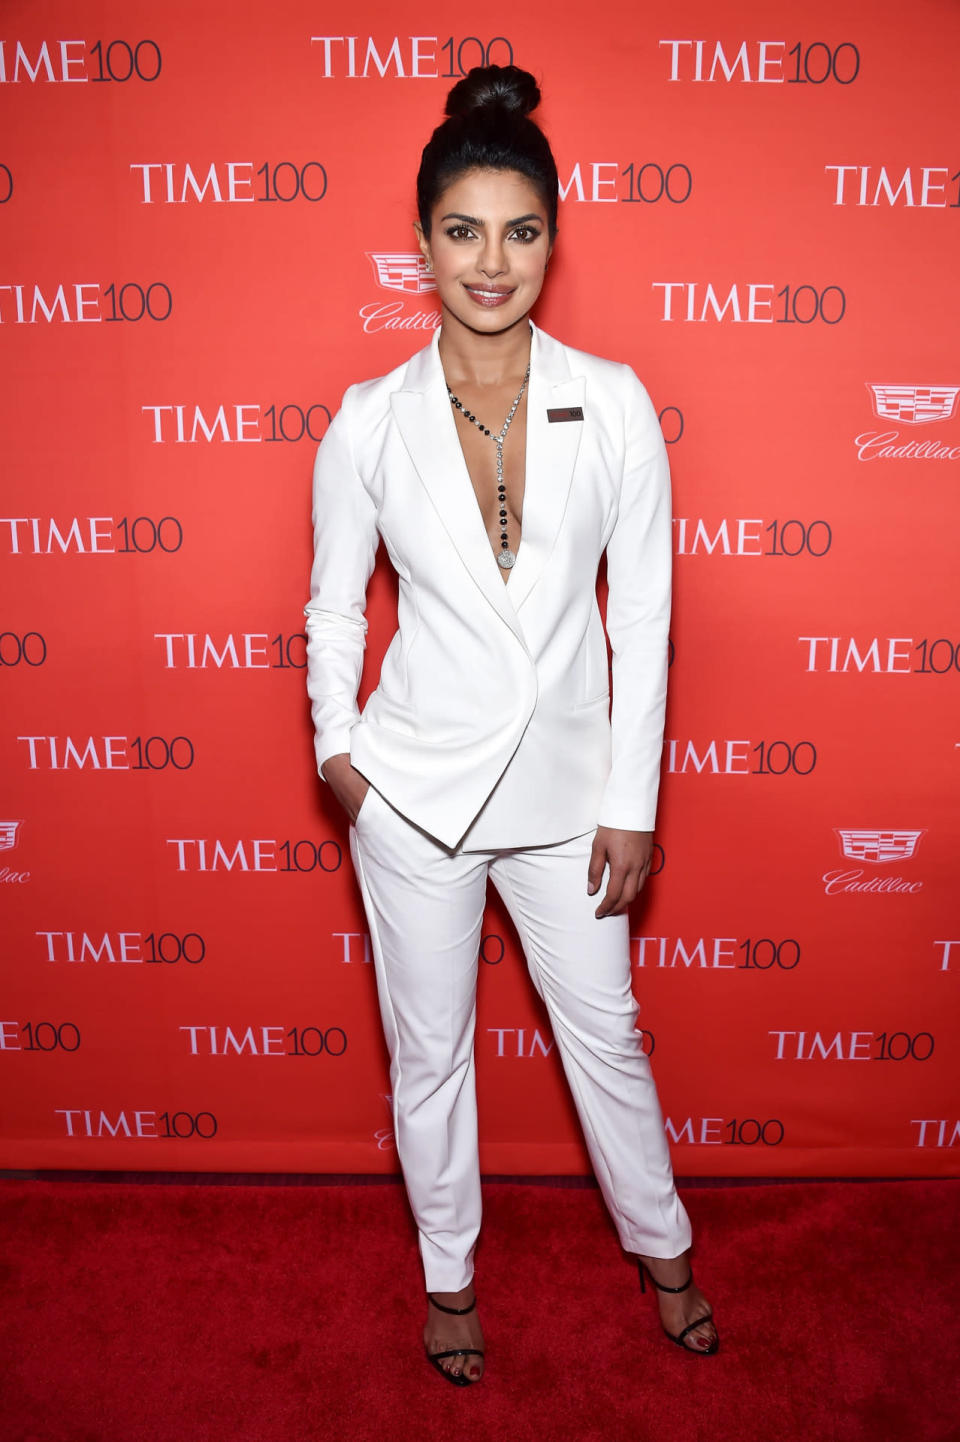 Priyanka Chopra in a white suit